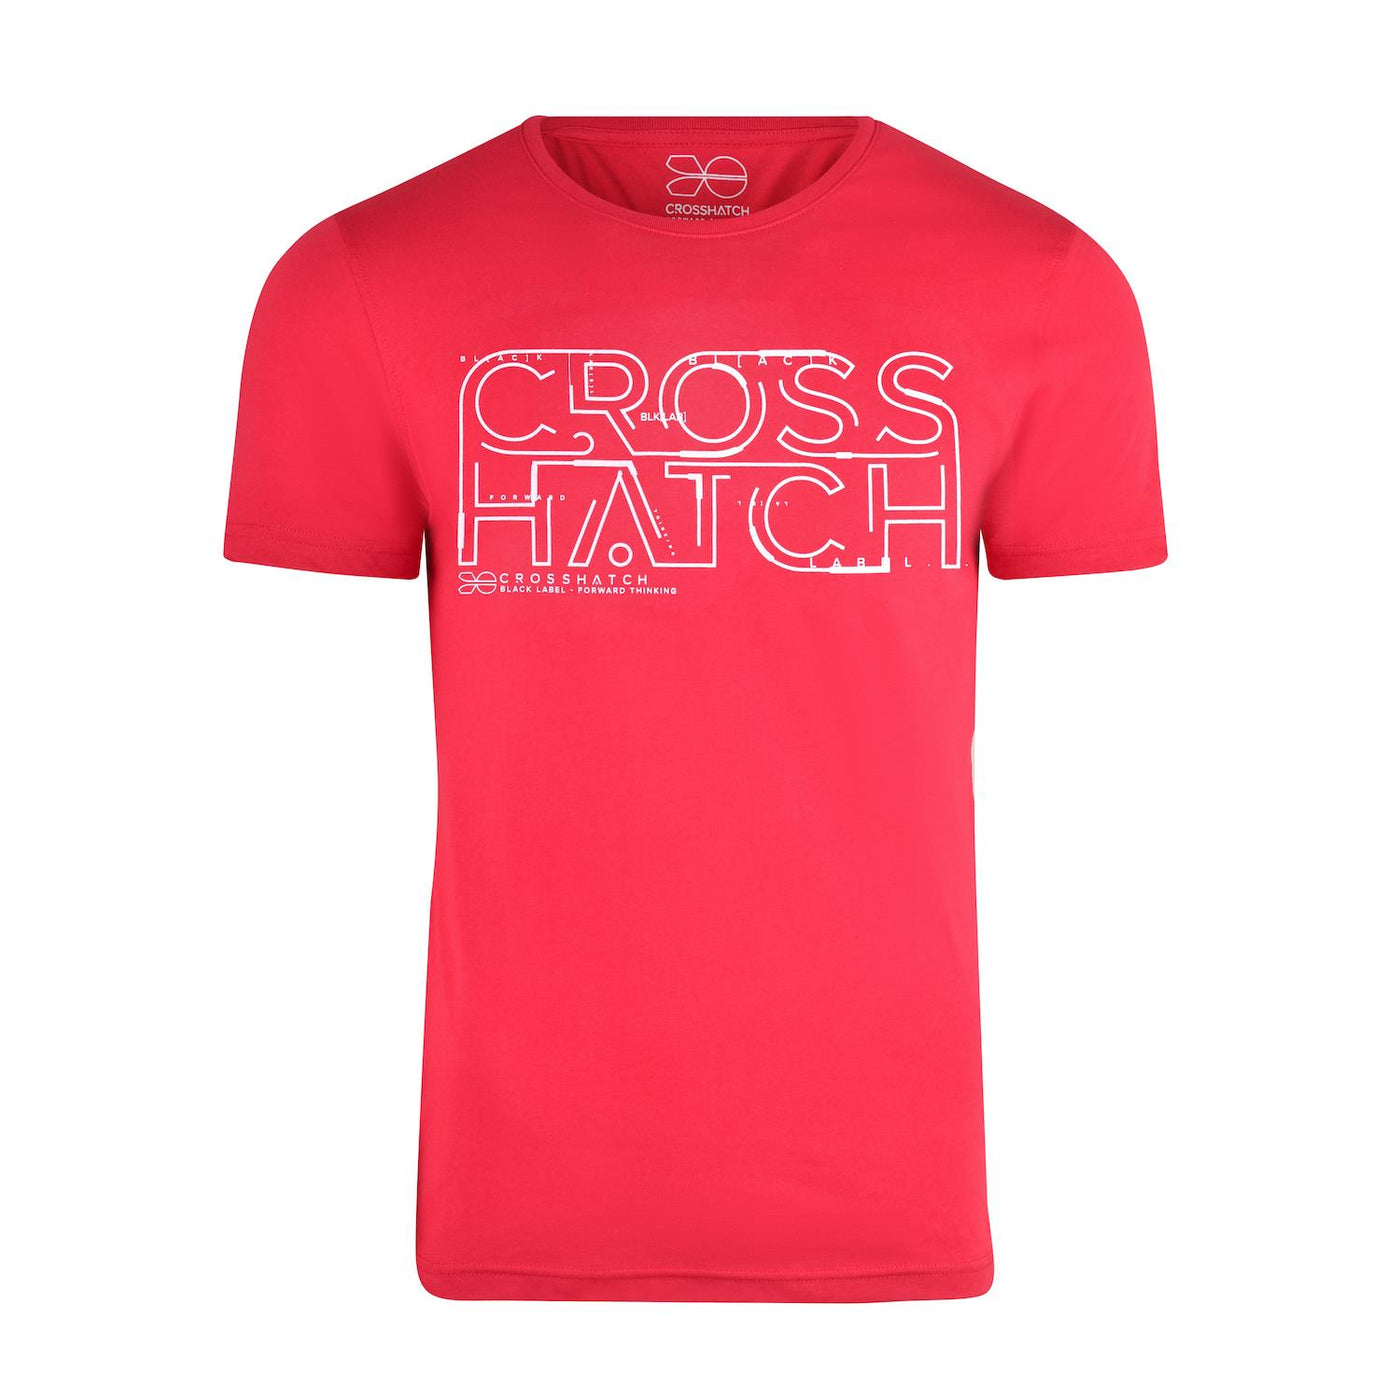 Crosshatch 5 Pack Designer Assorted T Shirts Crew Neck Soft Cotton Tee Top S M L XL XXL